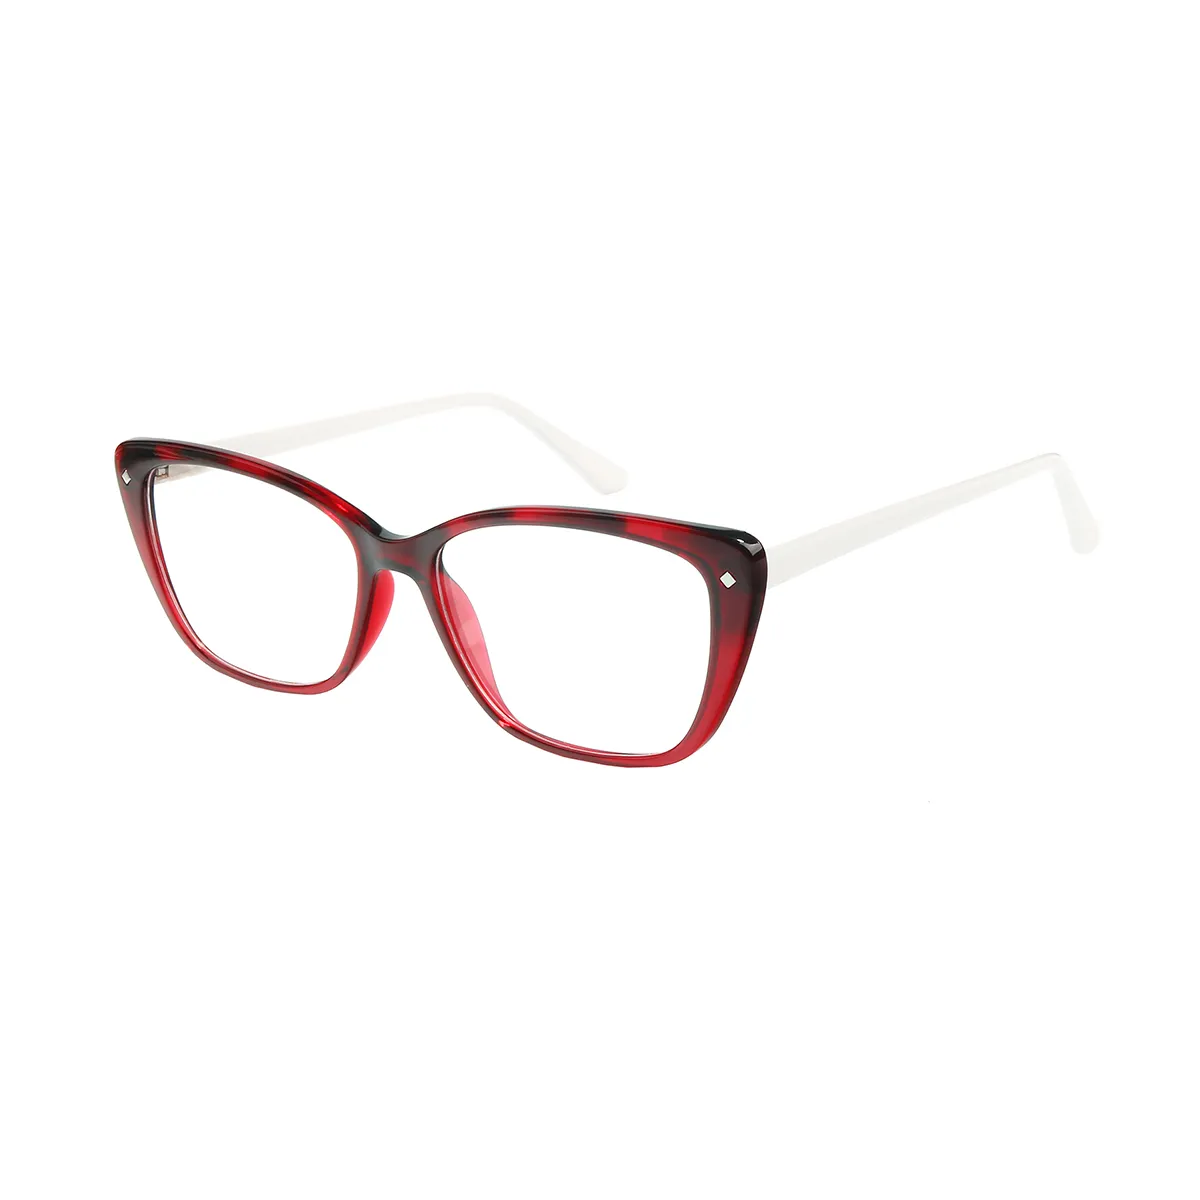 Gloria - Cat-eye Red Glasses for Women - EFE